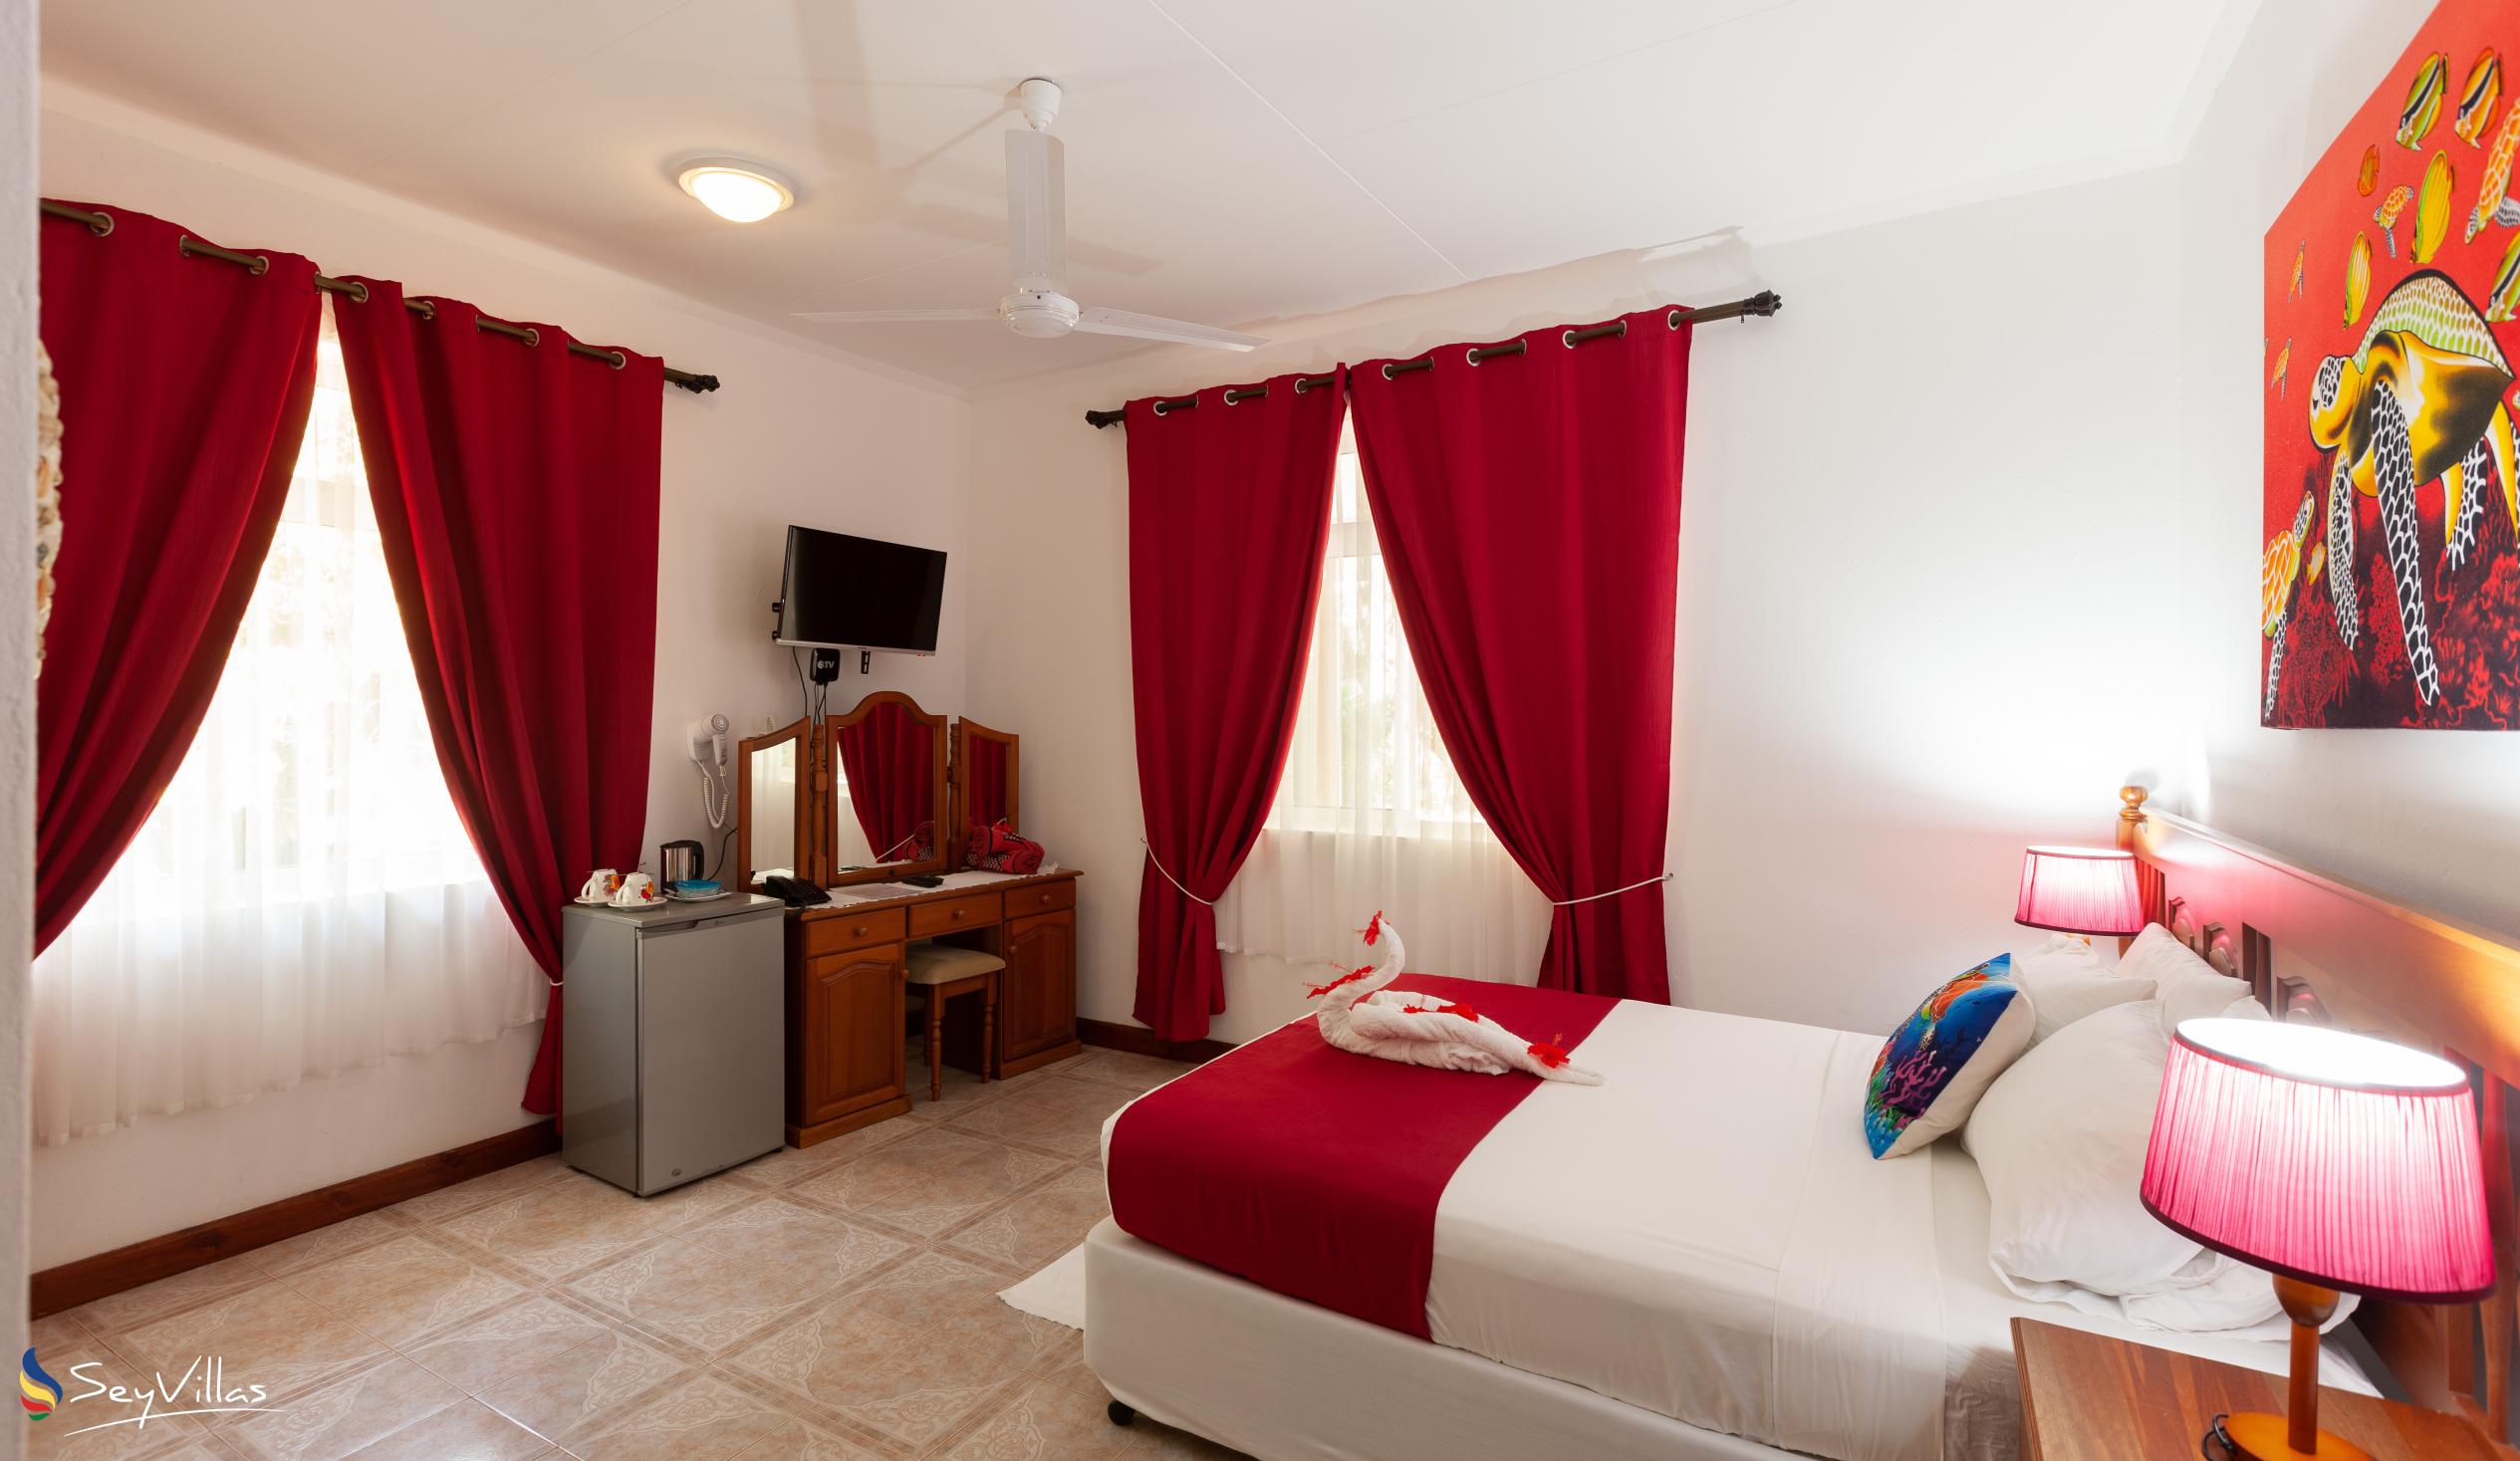 Photo 77: Le Chevalier Bay Guesthouse - Standard Double Room - Praslin (Seychelles)